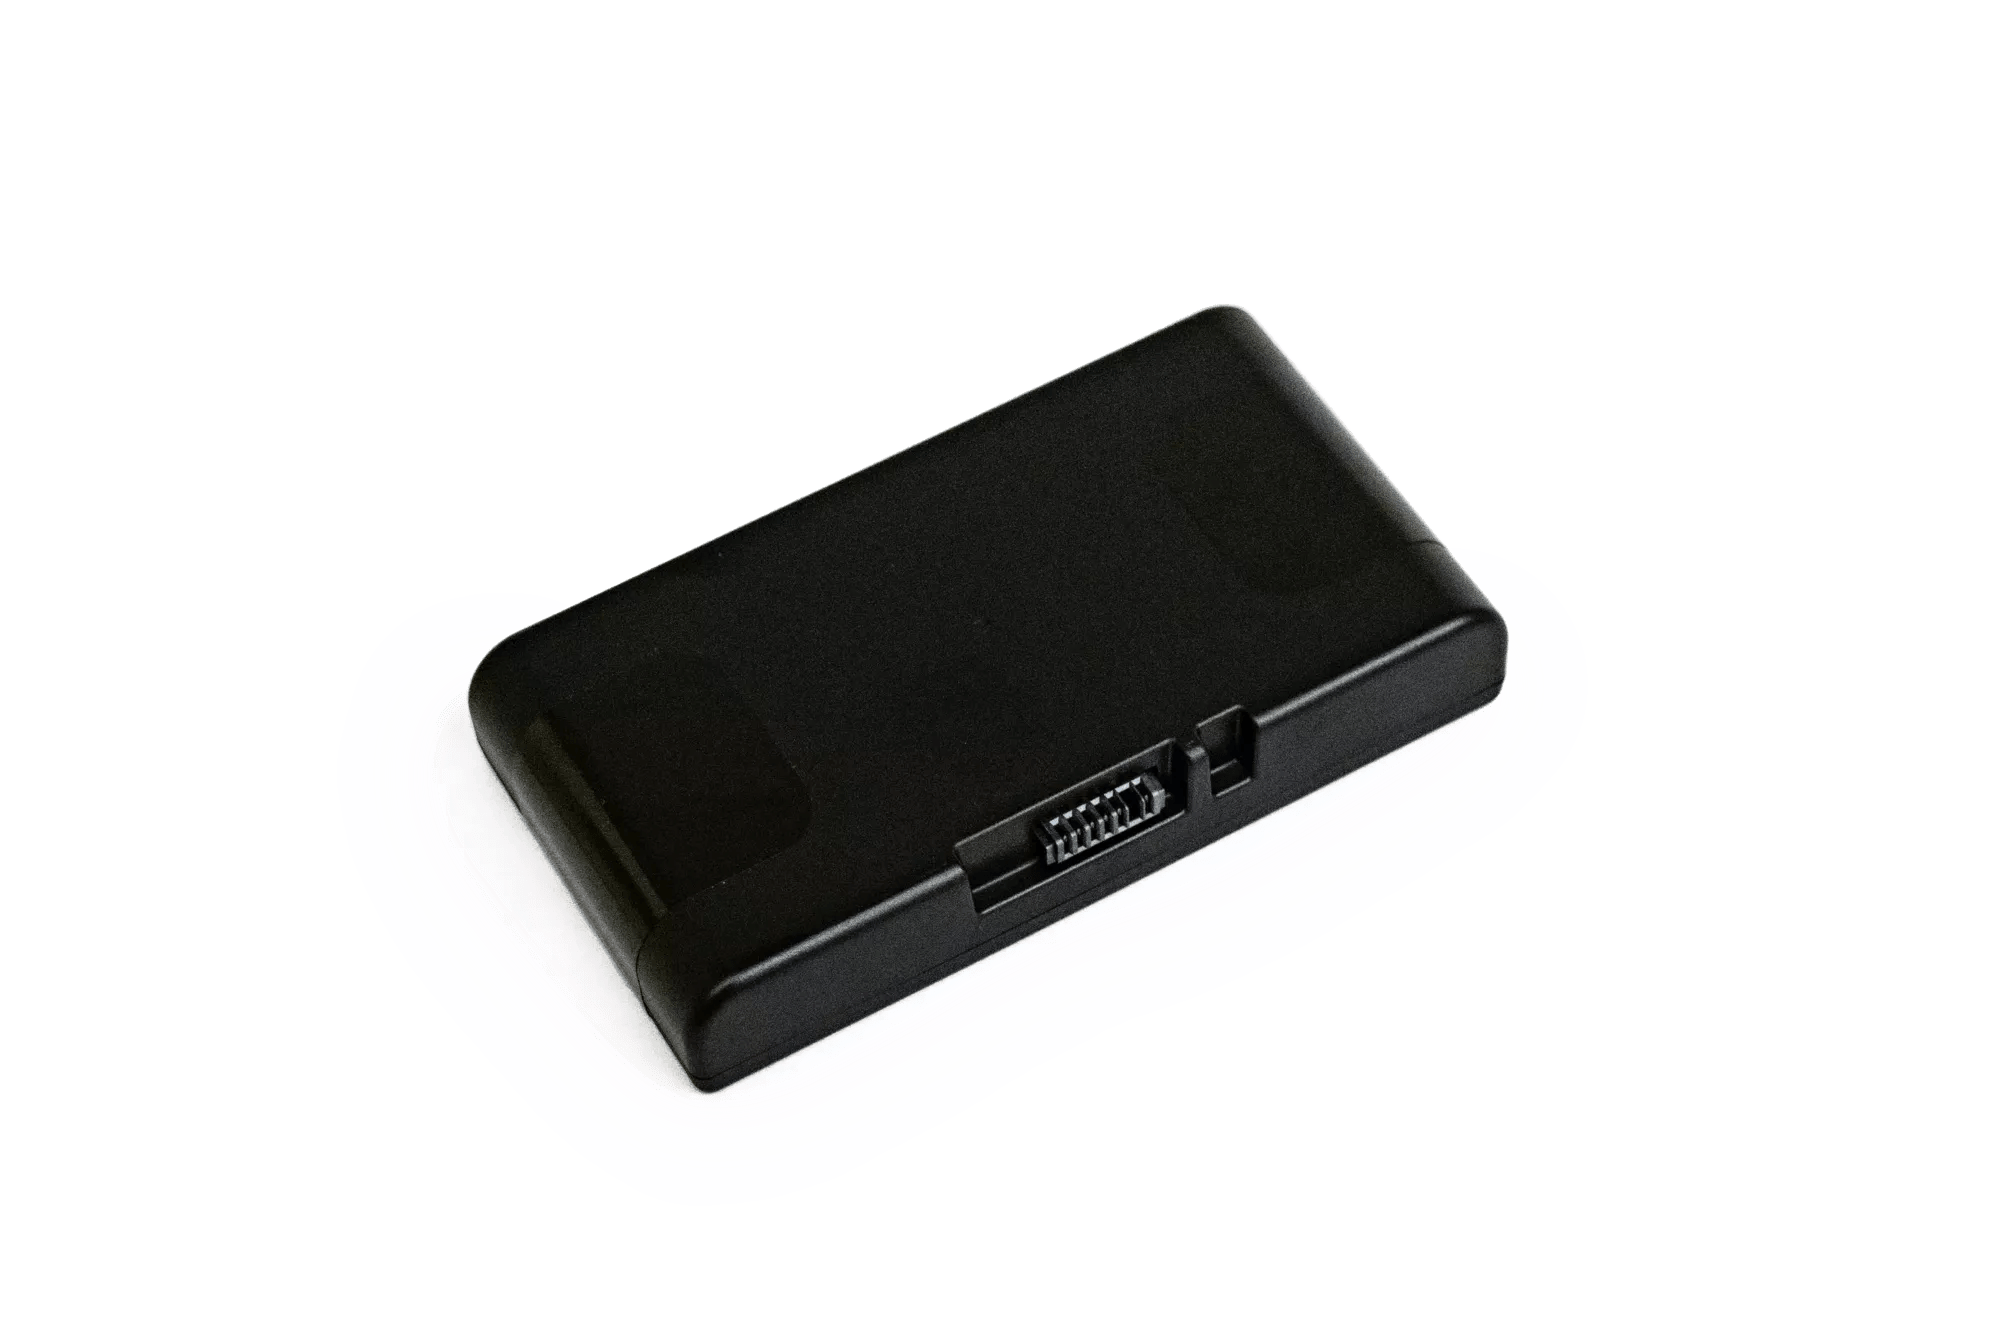 Bose S1 Pro+ Wireless Portable PA System w/ Rechargable Battery